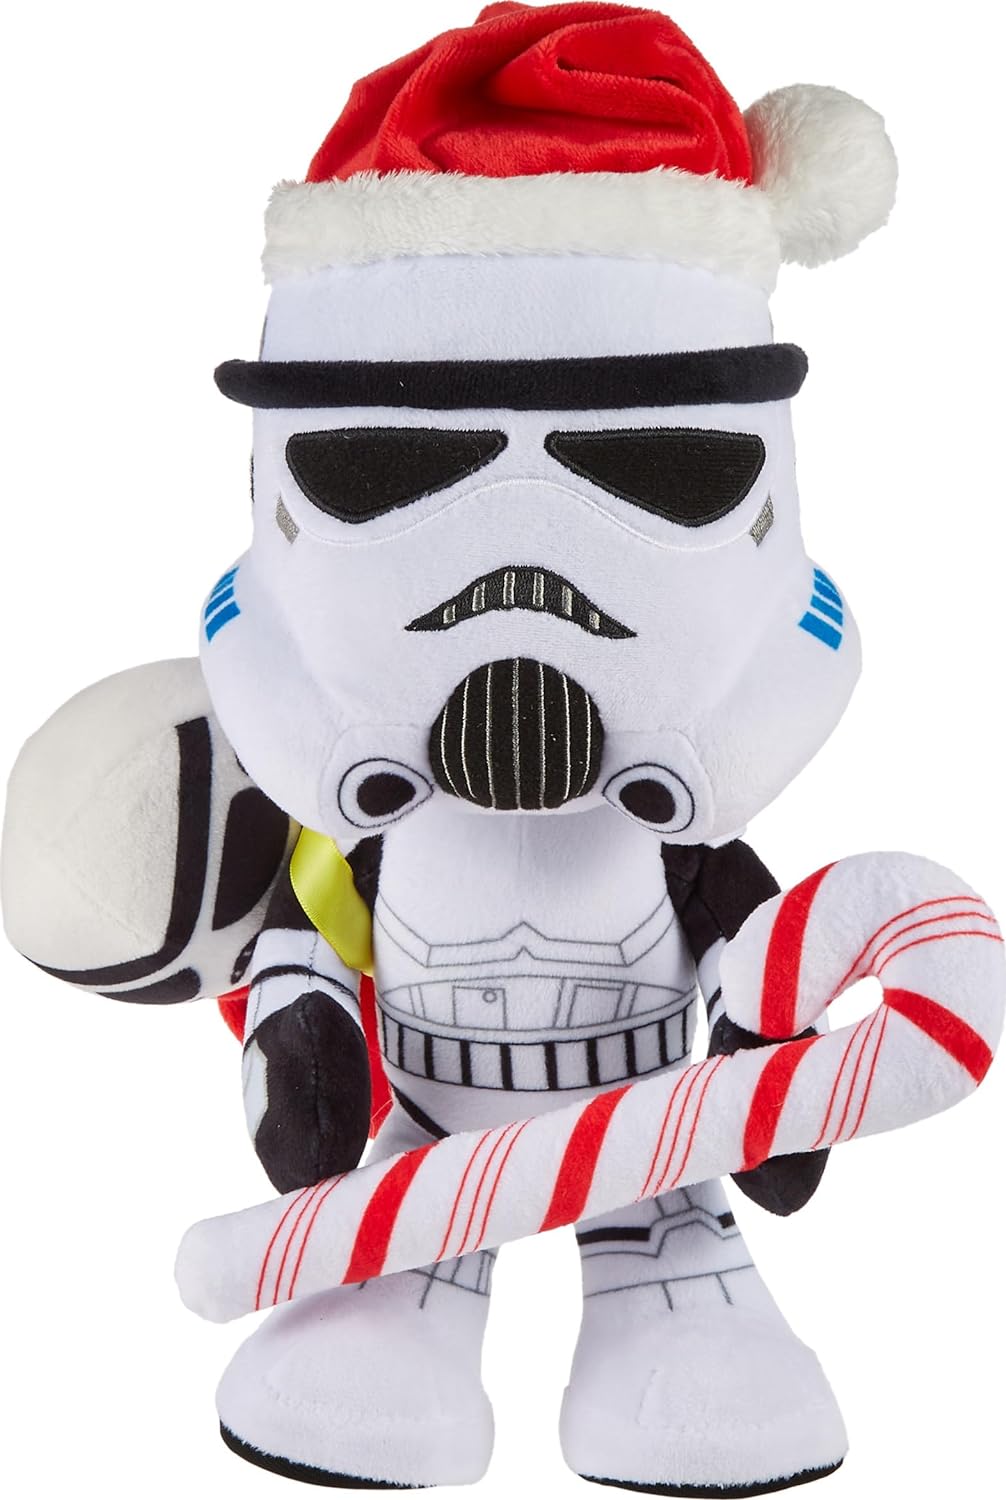 Mattel Star Wars Plush Toys: 10'' Winter Stormtrooper Plush Toy $7.49 + Free S&H w/ Prime or $35+ & More